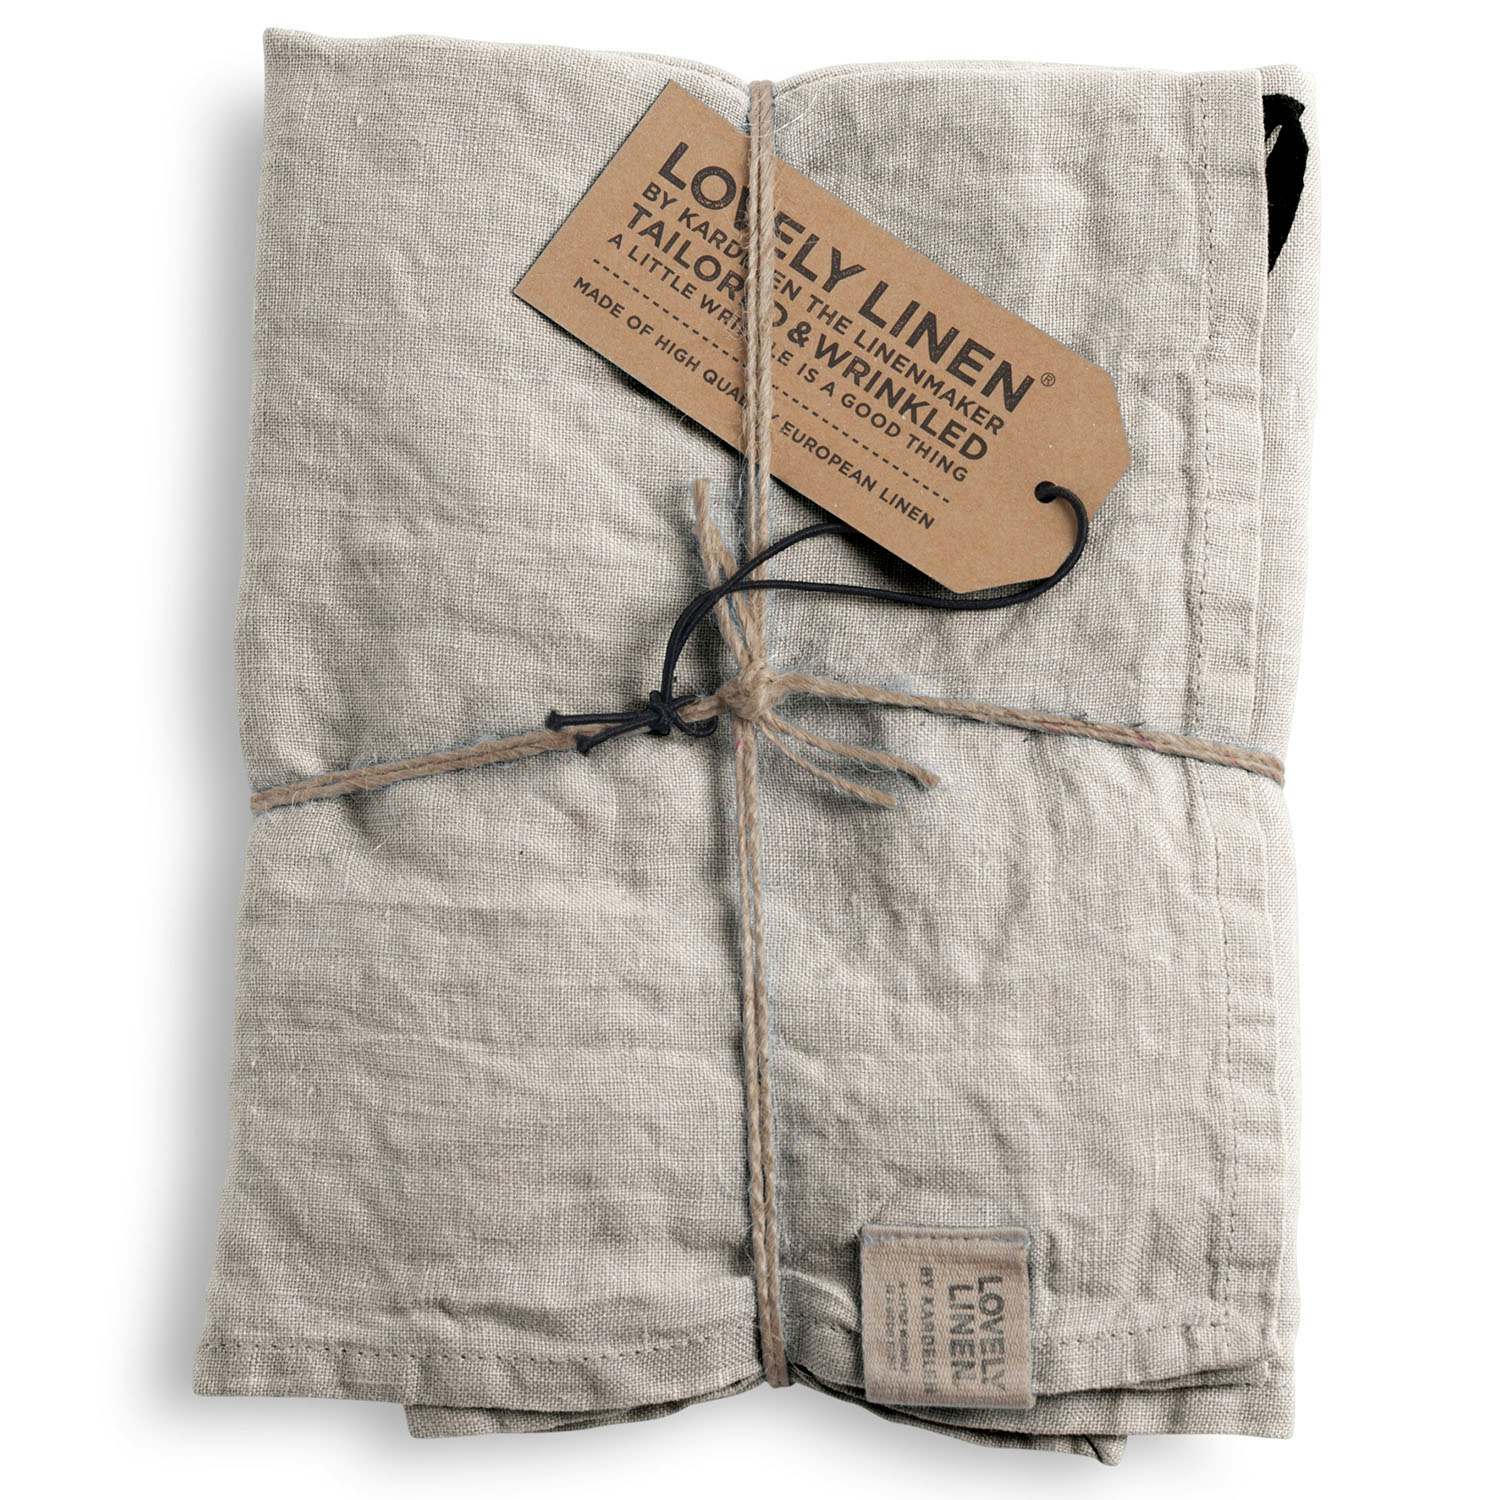 https://royaldesign.com/image/2/lovely-linen-misty-kitchen-towel-45x70-meadow-1